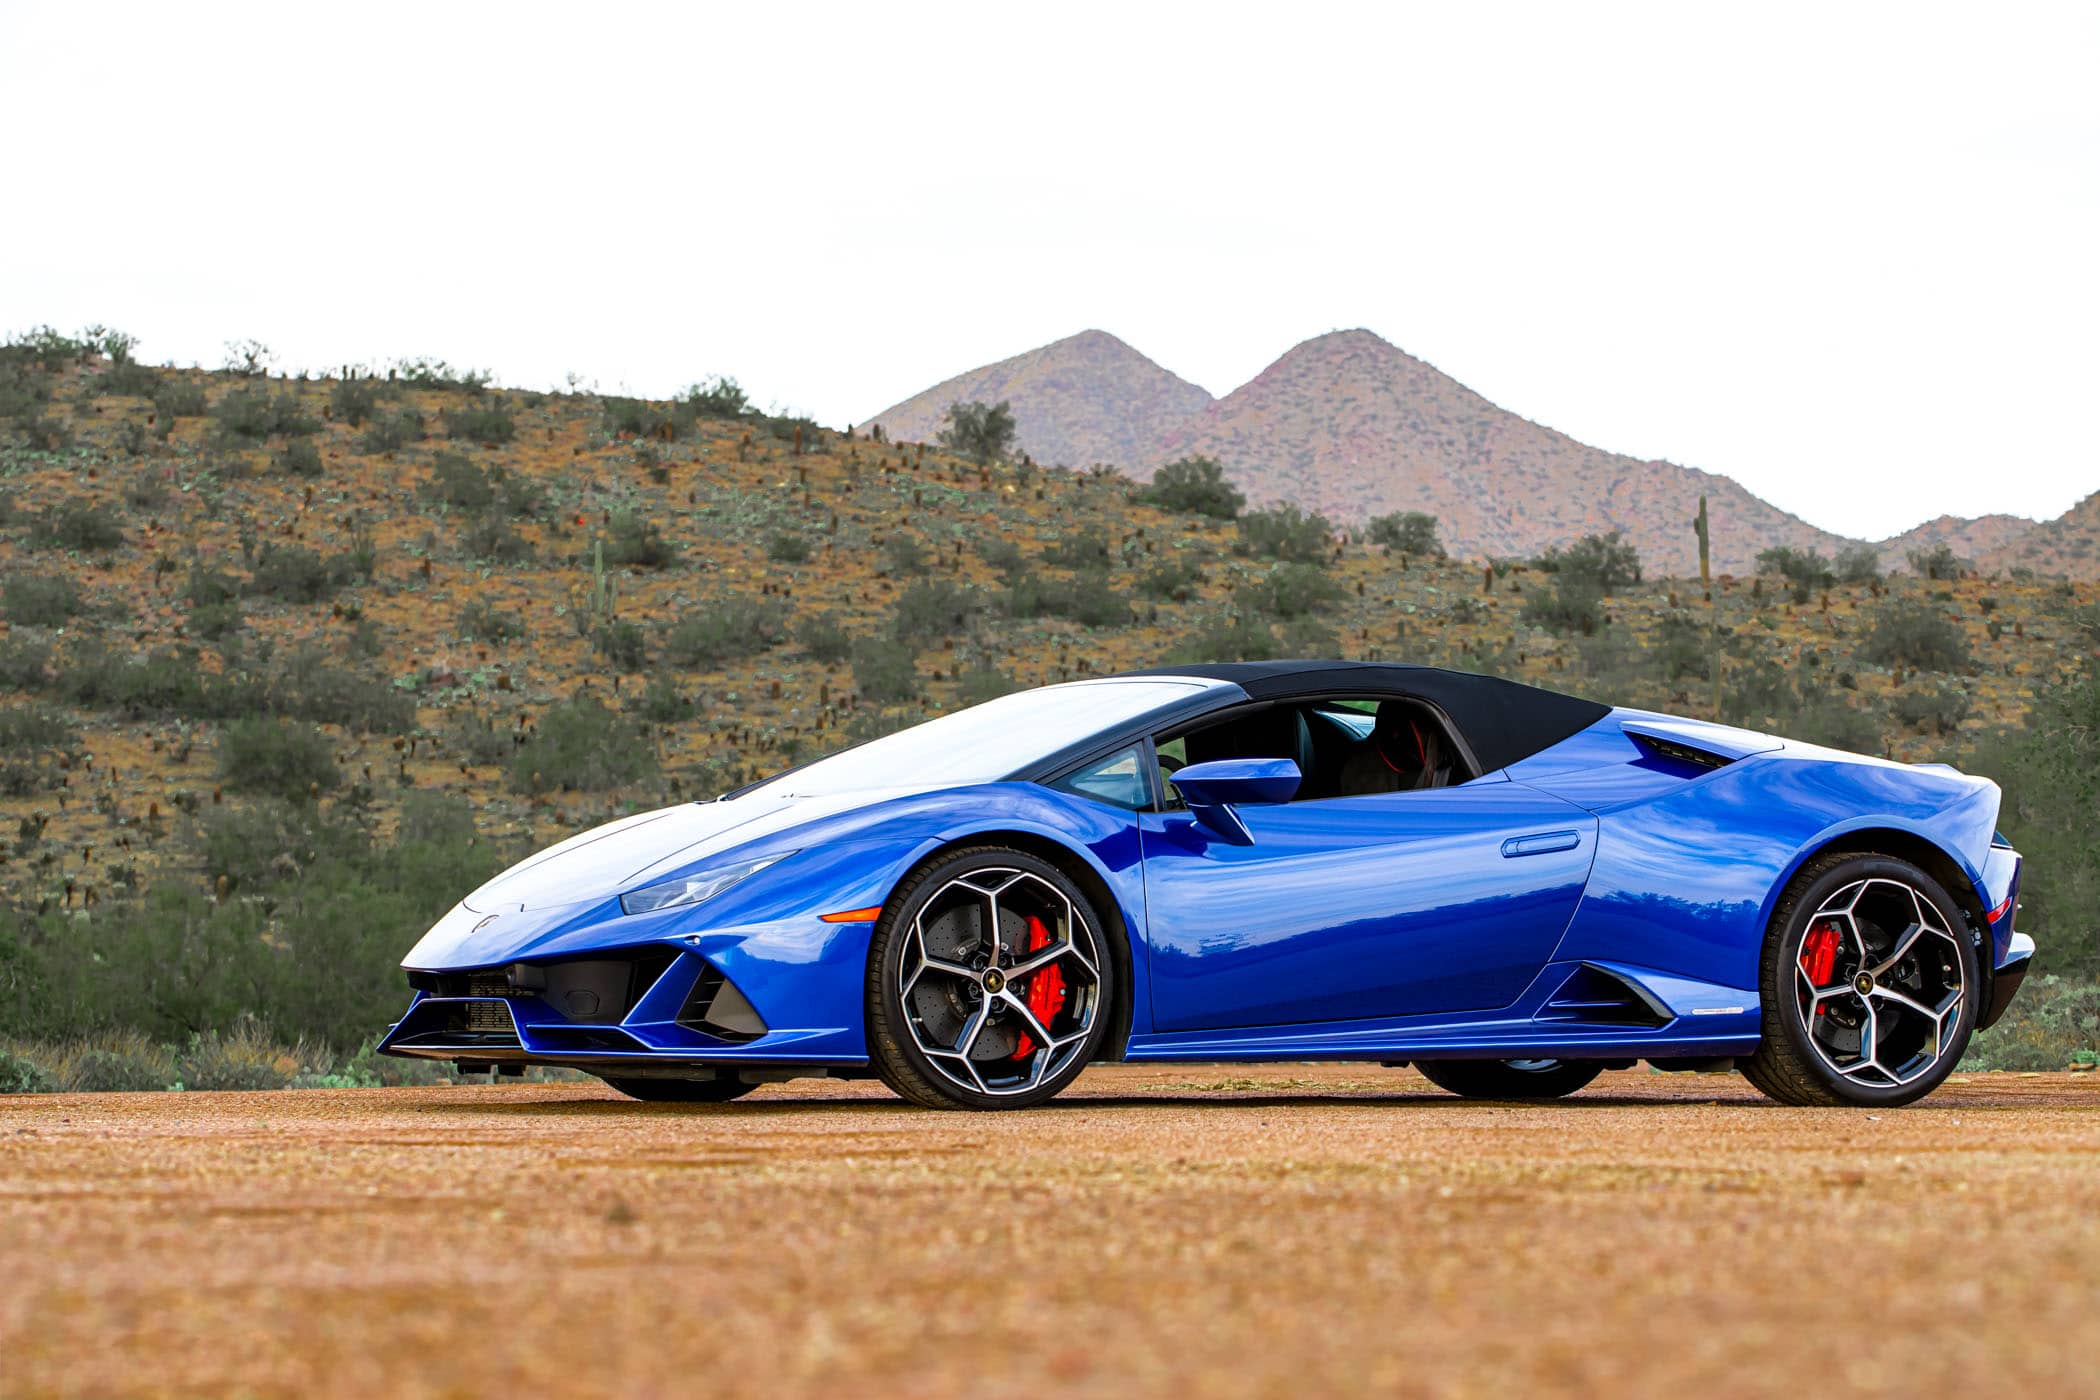 Lamborghini side view in desert